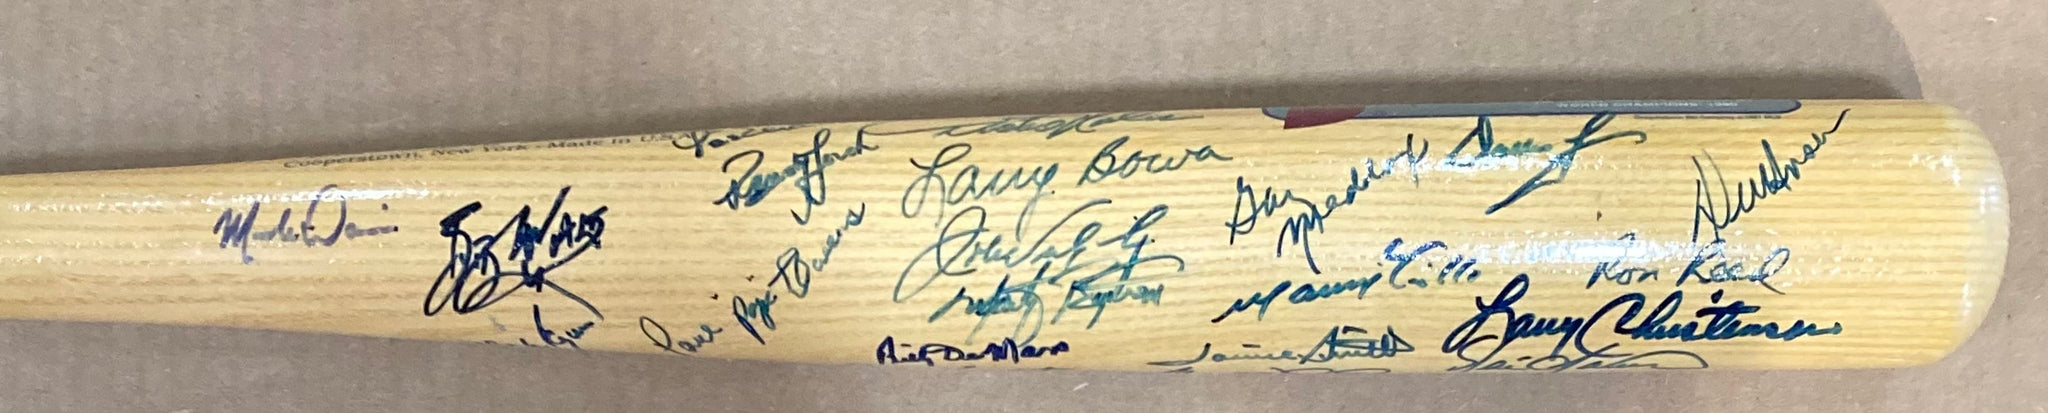 Autographed/Signed Larry Bowa 1980 WS Champs Philadelphia